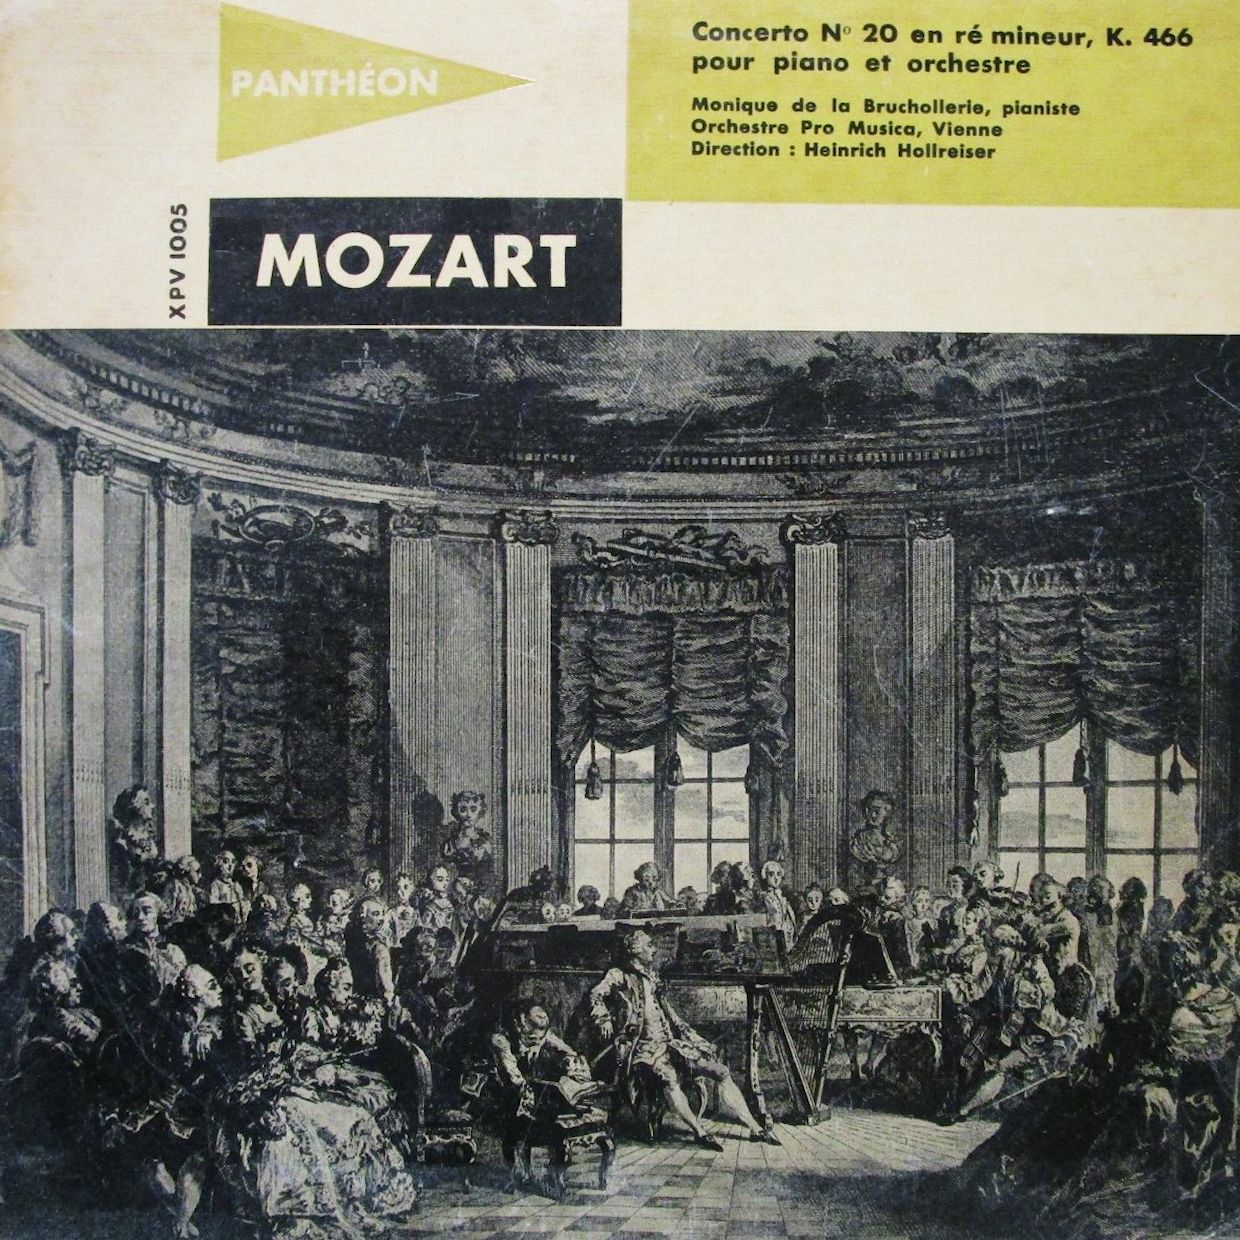 XPV 1005 Mozart KV 466 Bruchollerie ProMusicaWien Hollreiser Recto